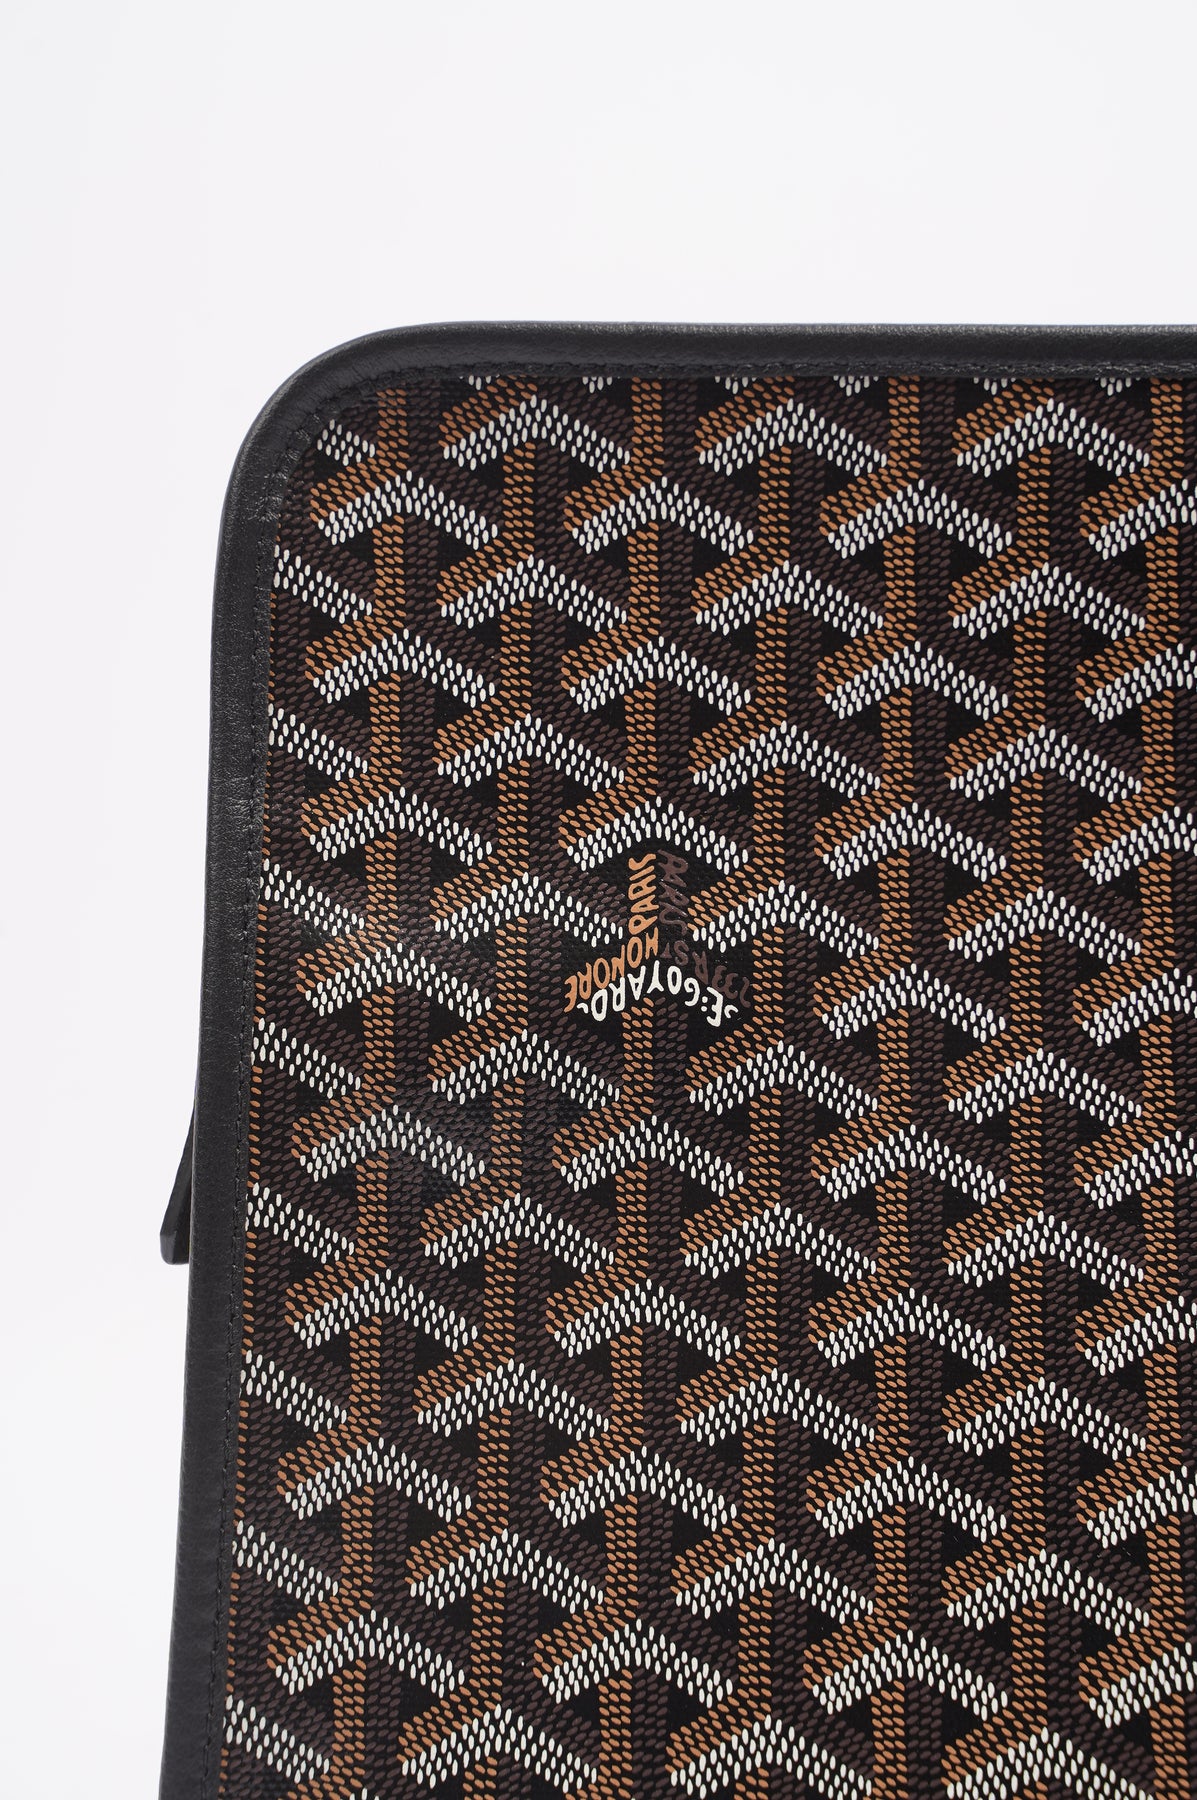 Goyard Senat medium pouch in black/tan color